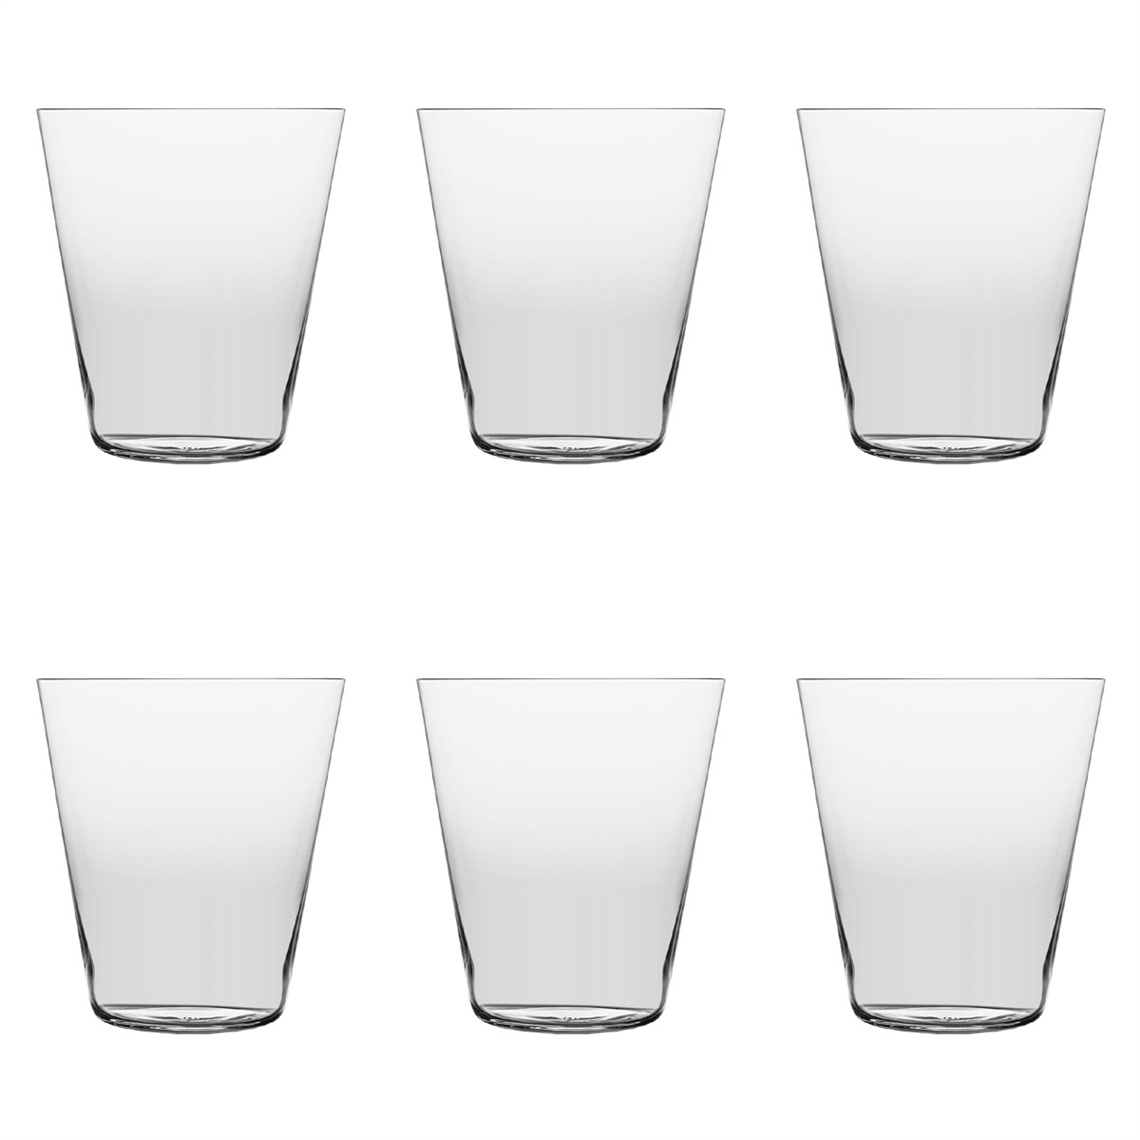 Zalto Denk Art Stemless Coupe Water Glass - Set of 6